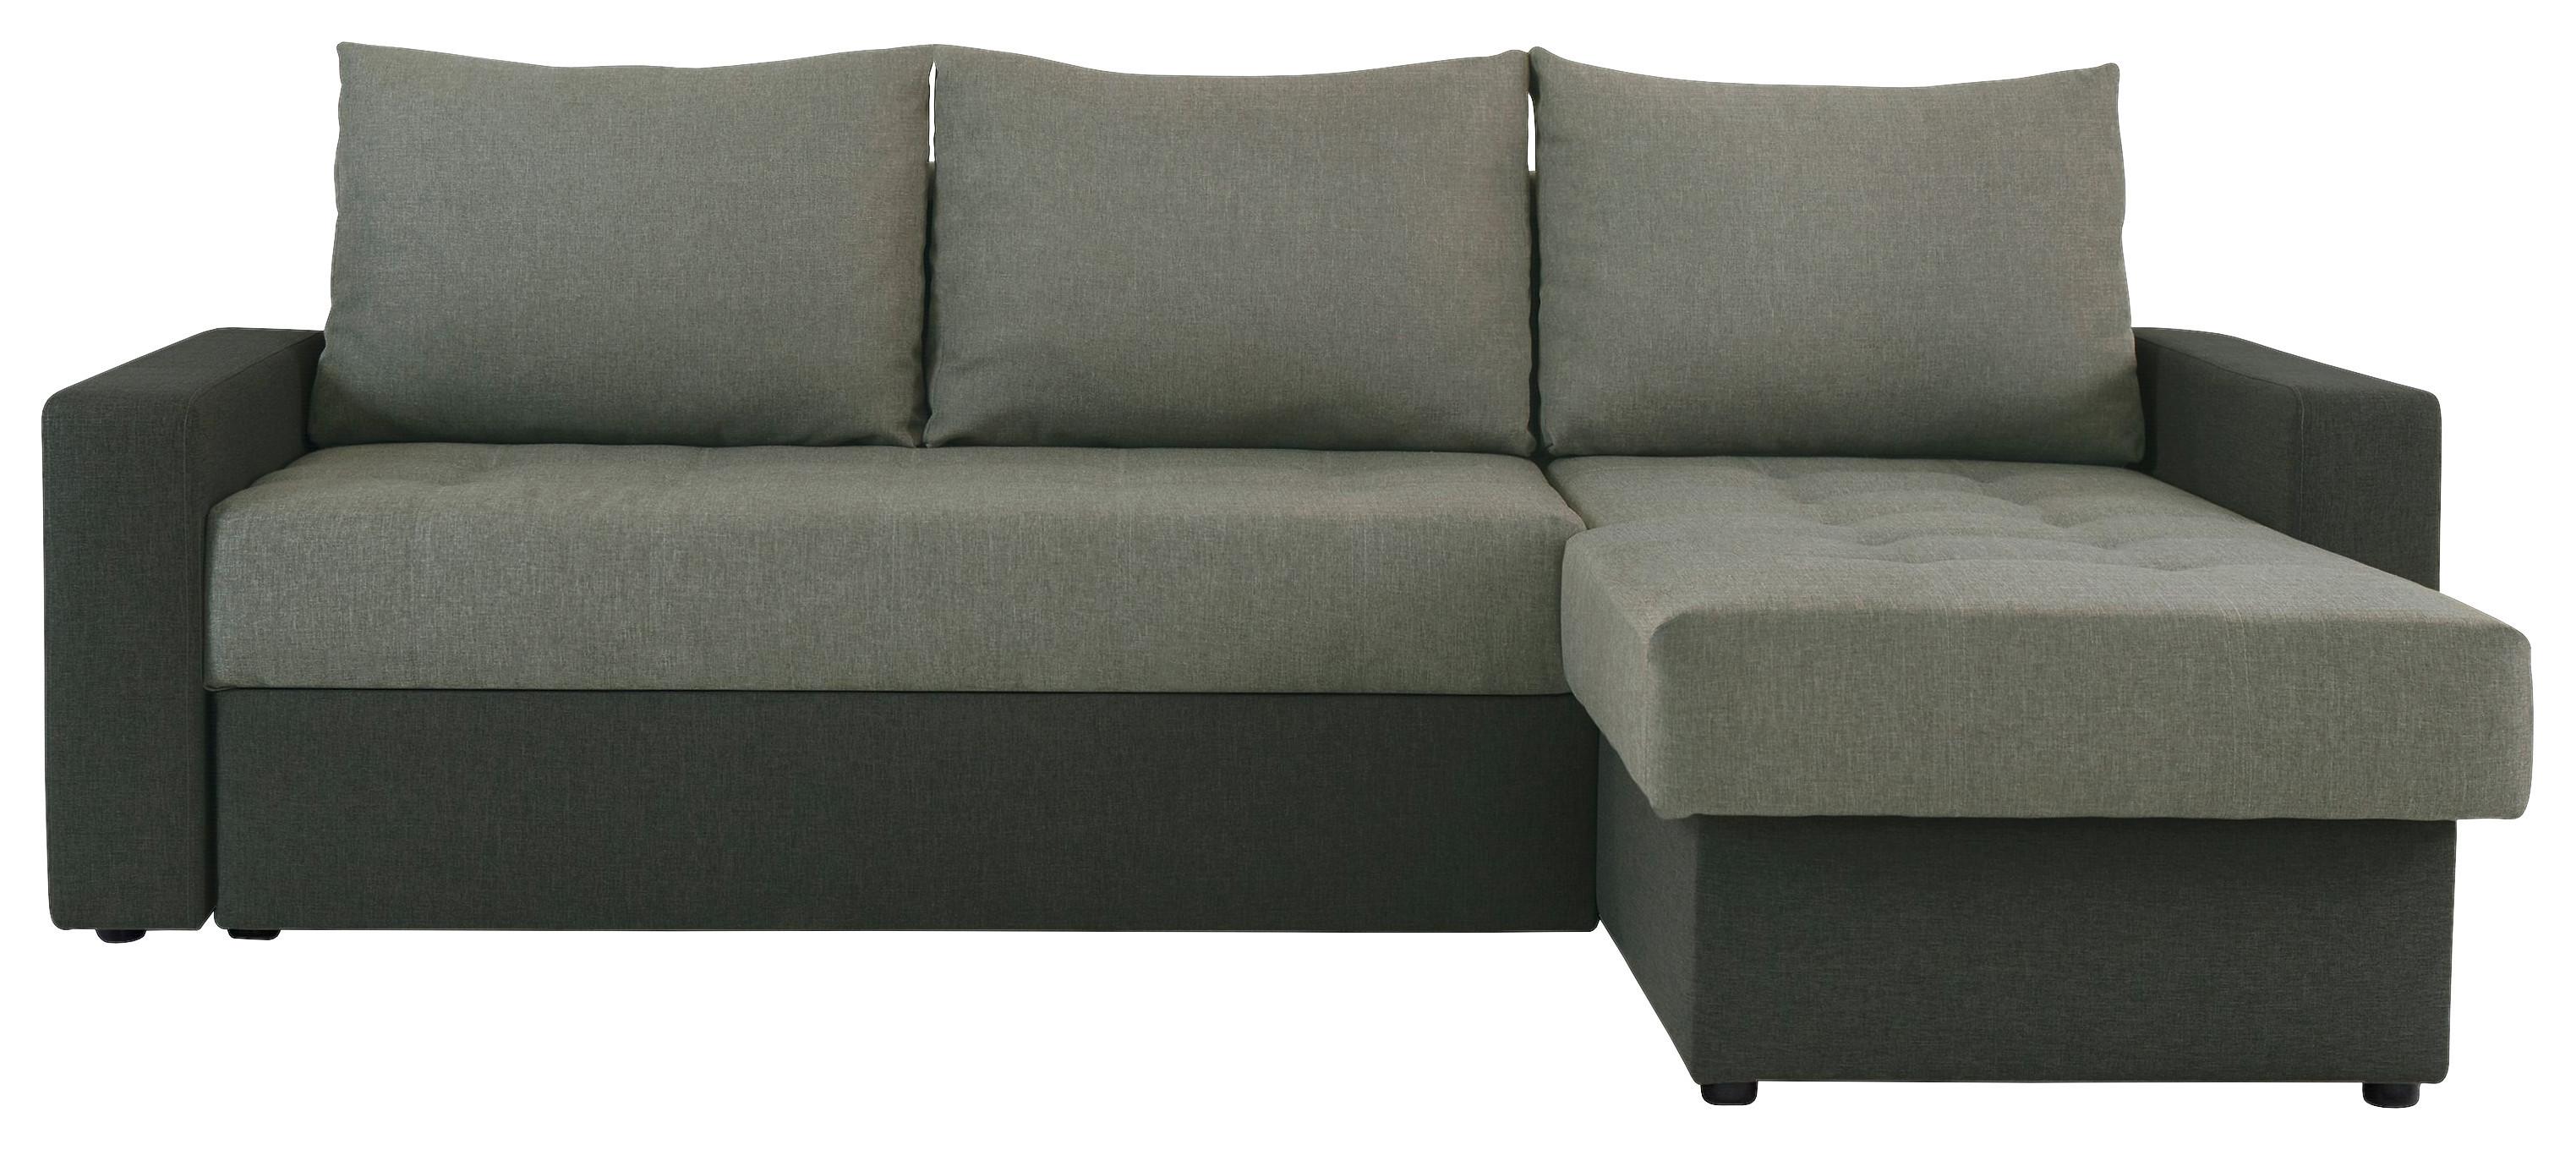 Sedežna Garnitura Atlanta - črna/zelena, Moderno, tekstil (230/160cm) - Modern Living